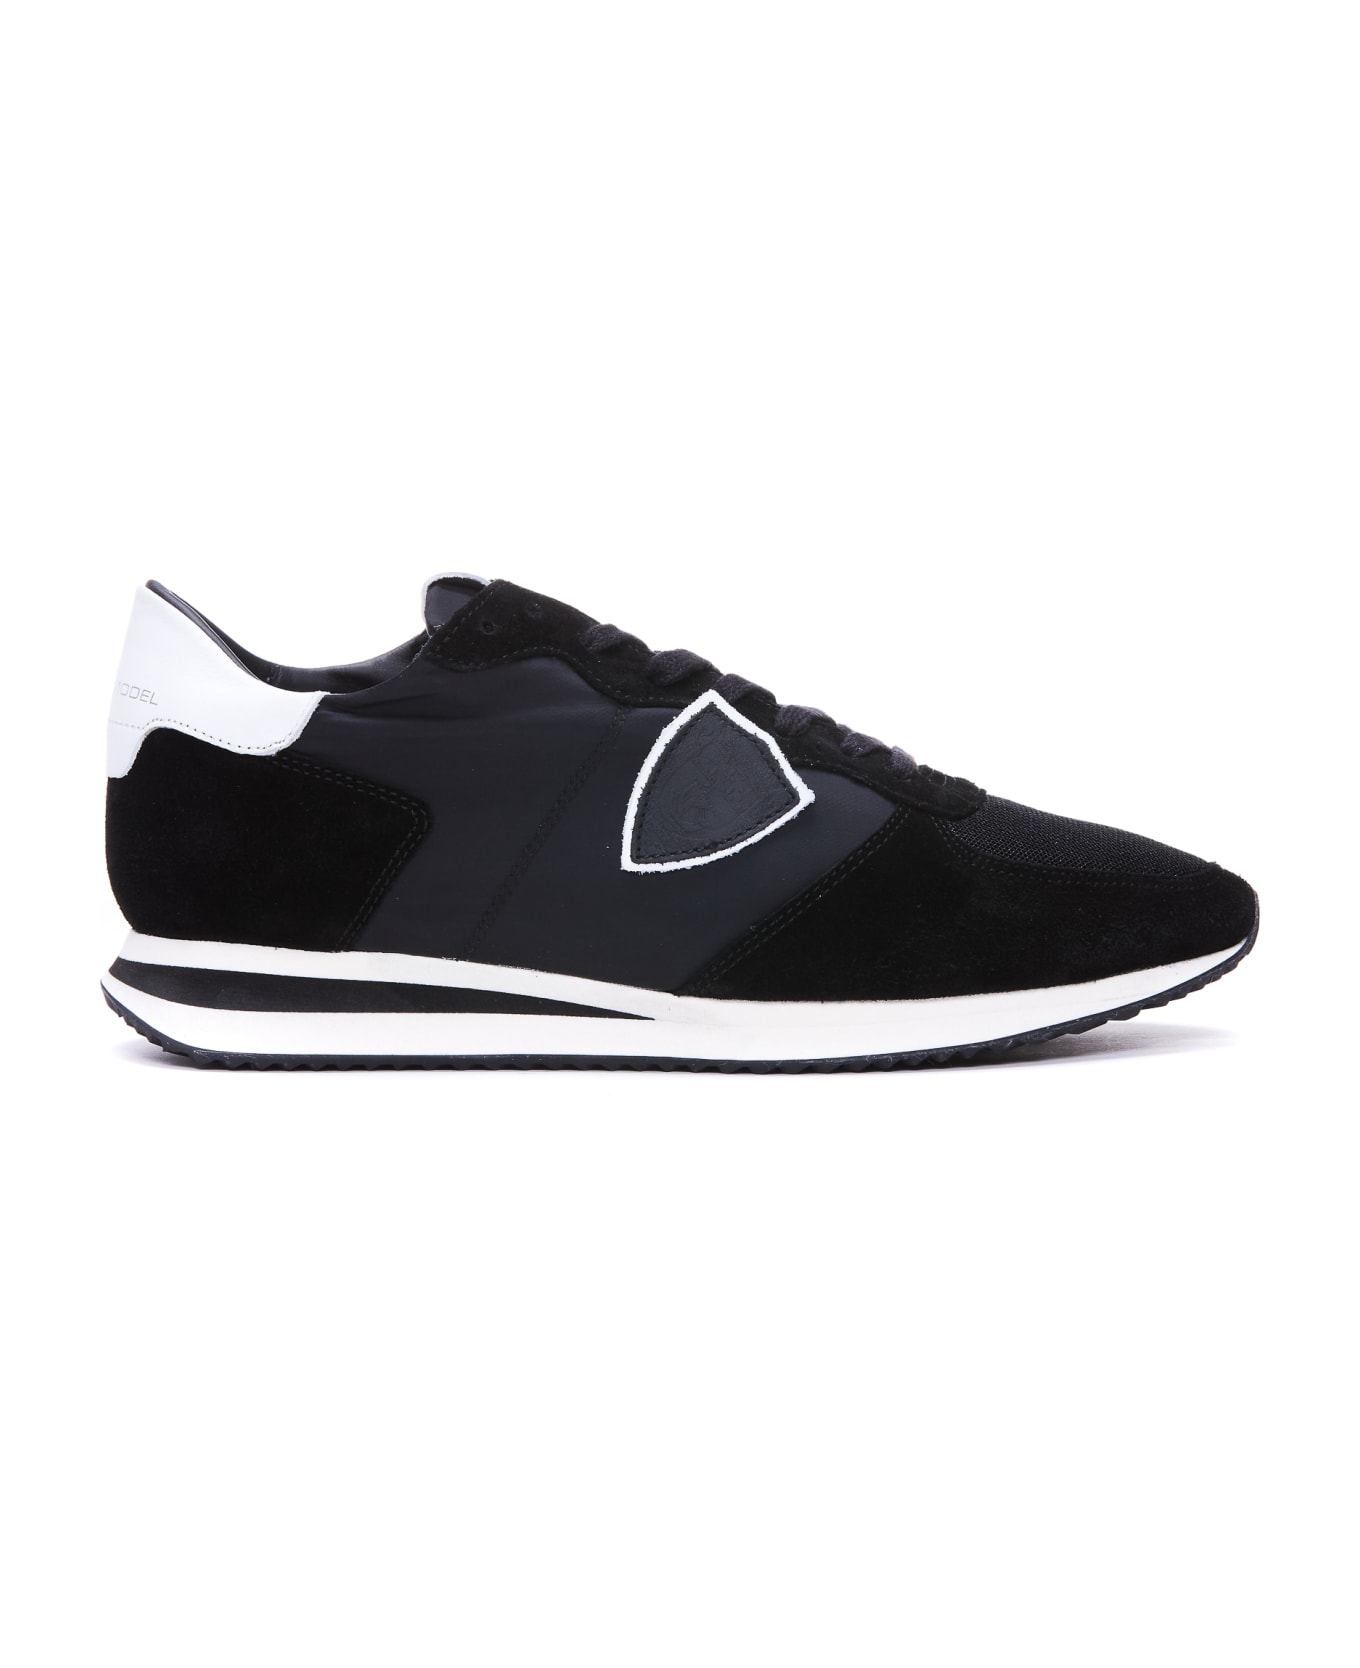 Philippe Model Trpx Sneakers - Black